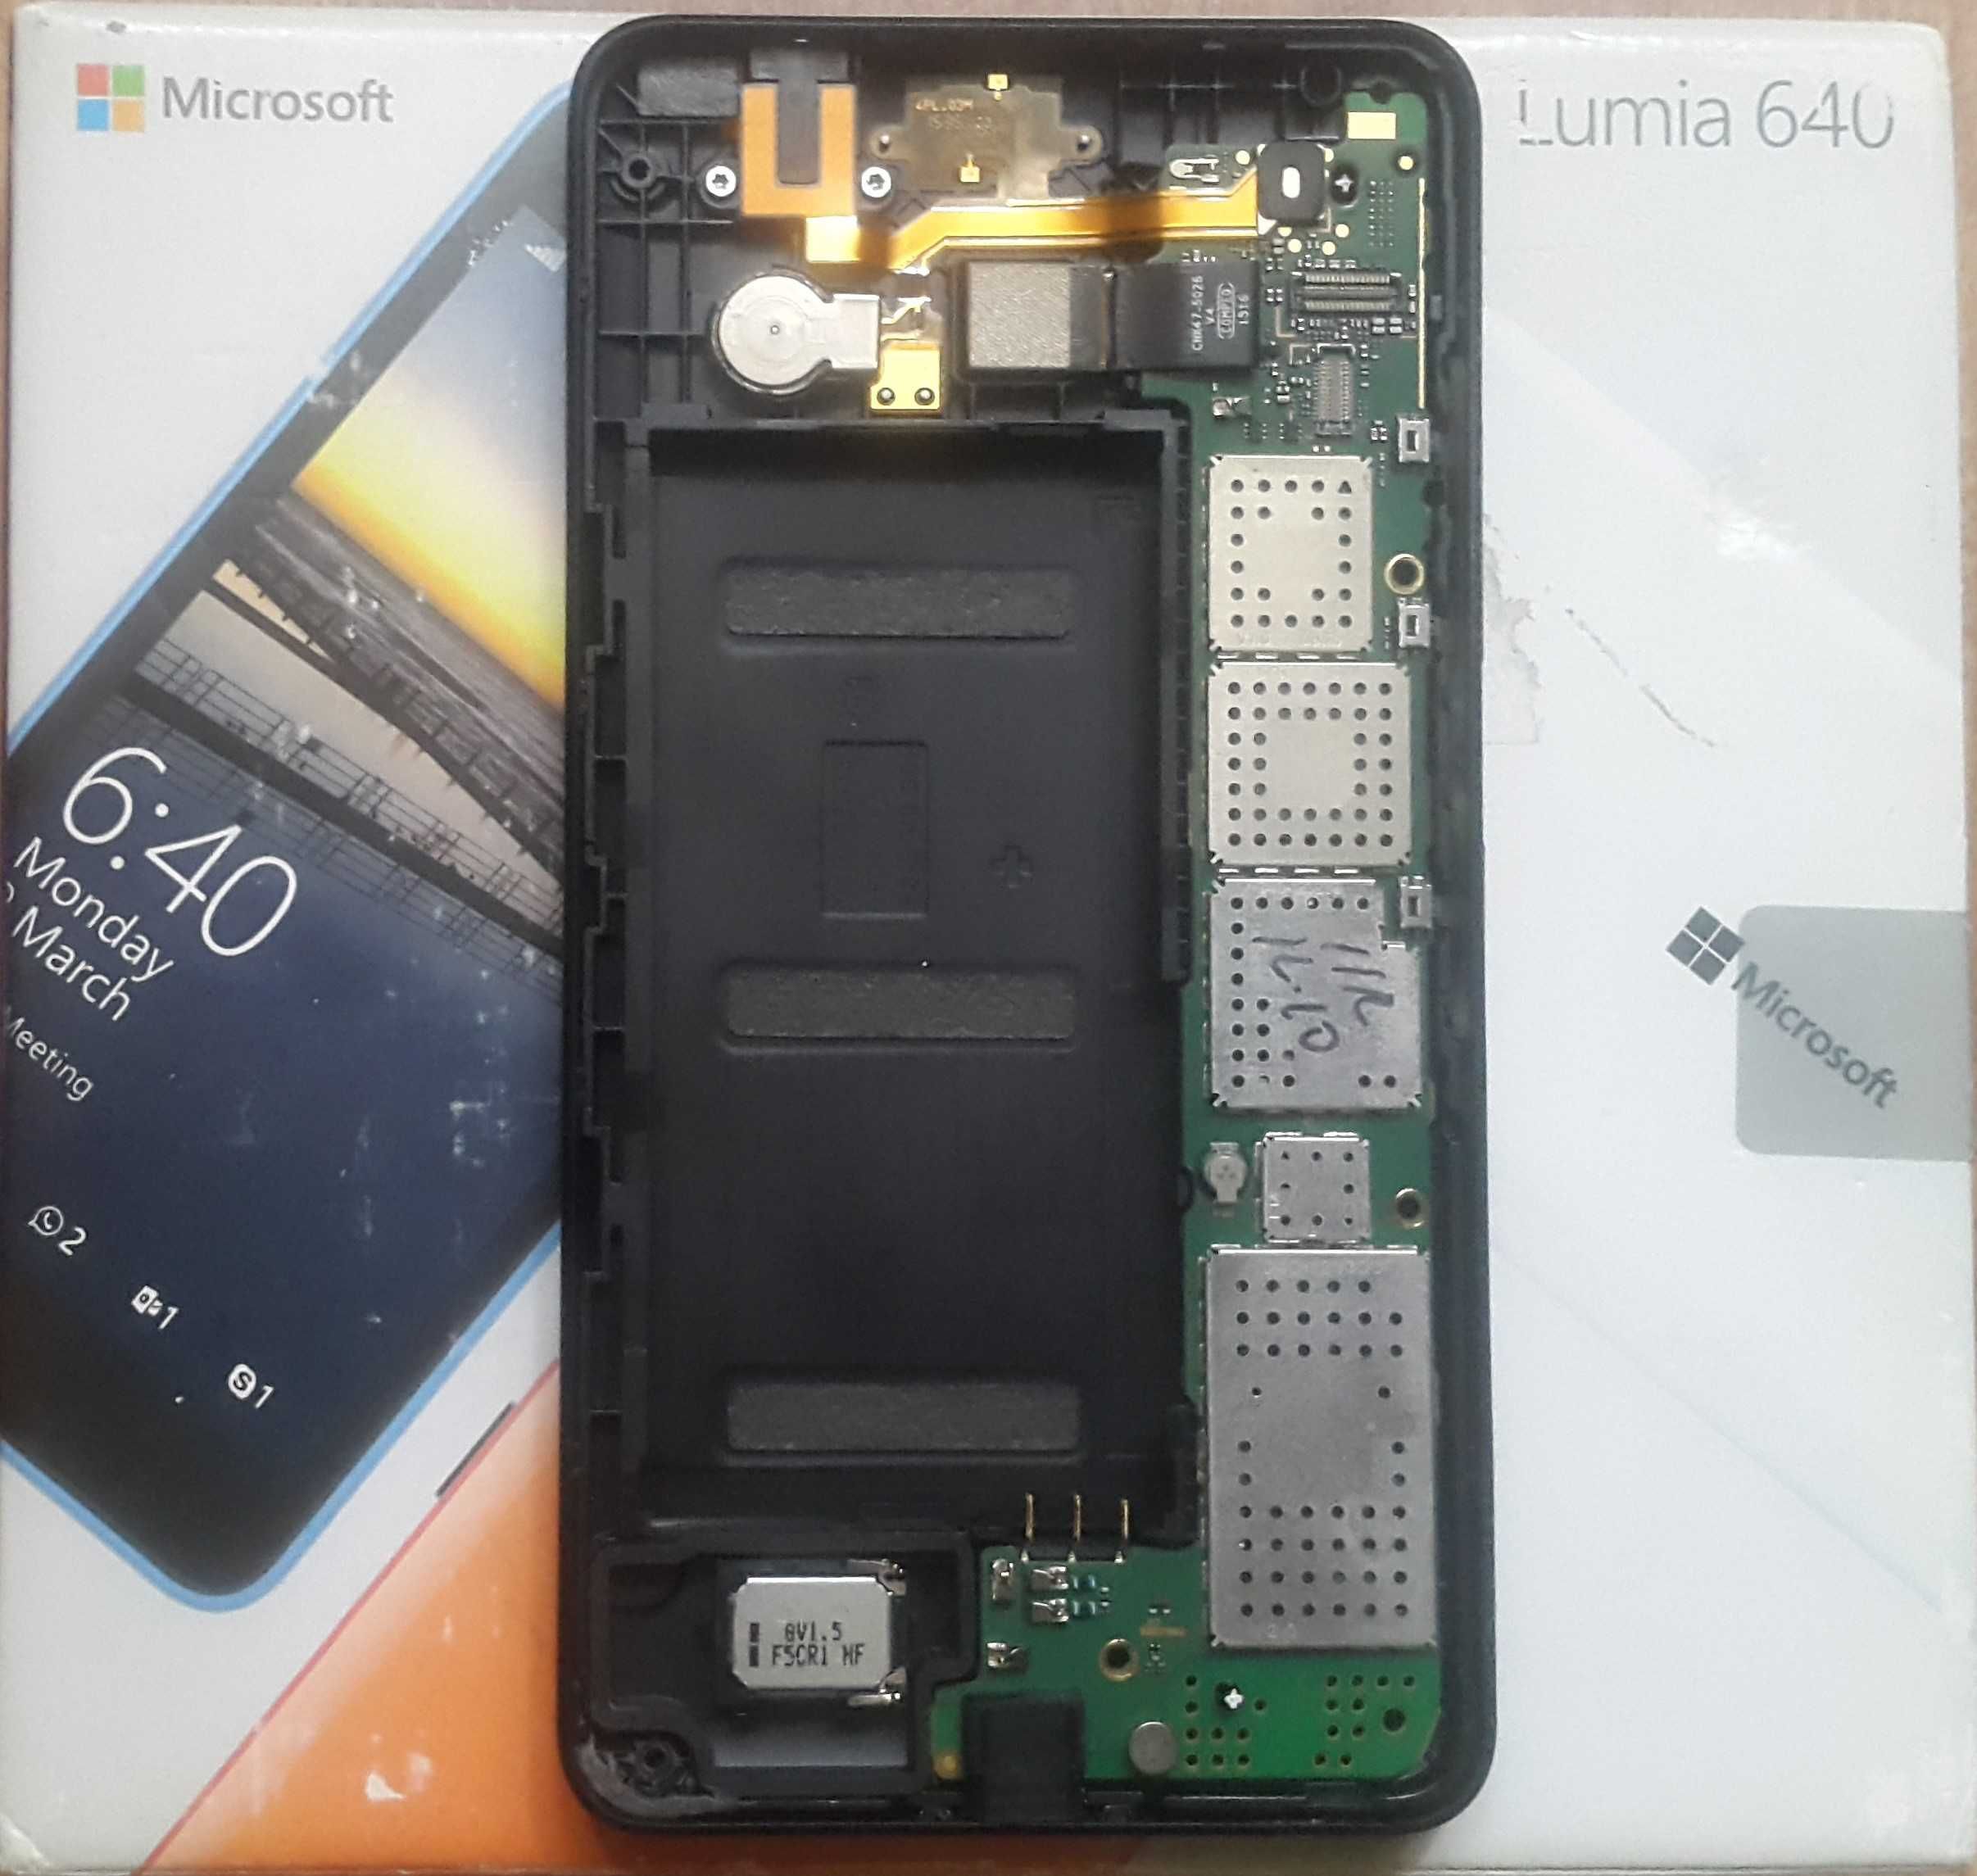 Lumia 640 LTE - piese de schimb